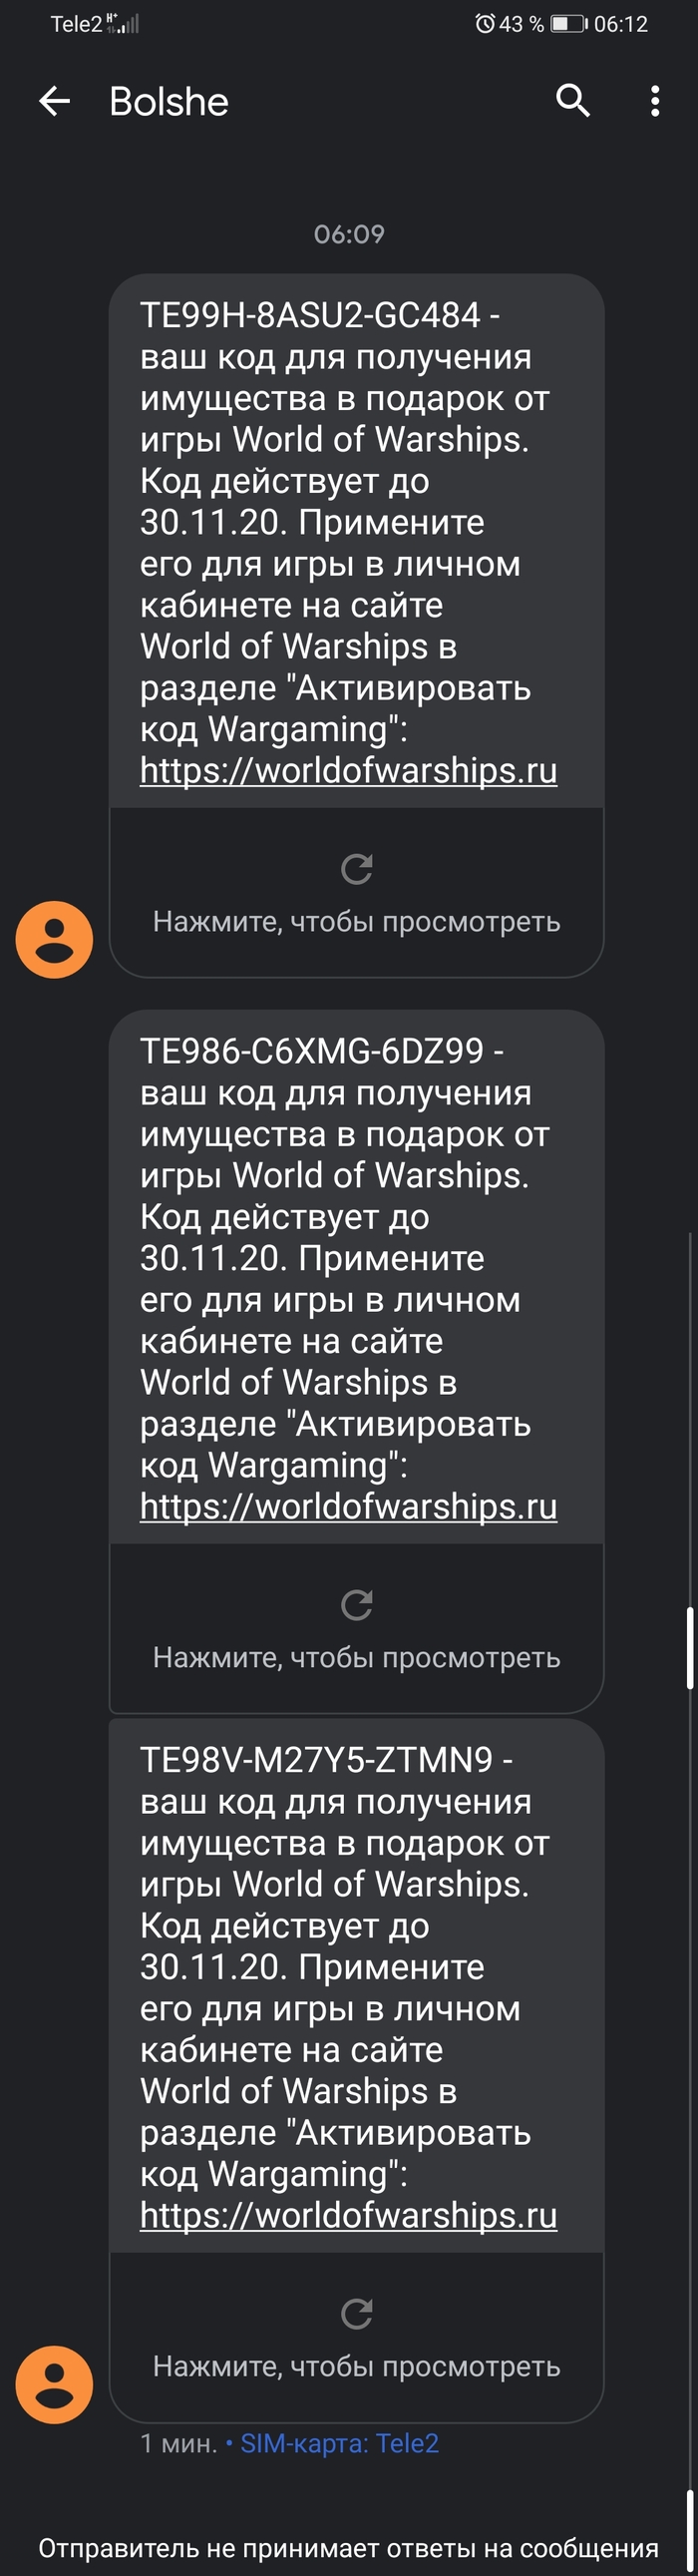 World of Warships  World of Warships, , , , Wargaming,  